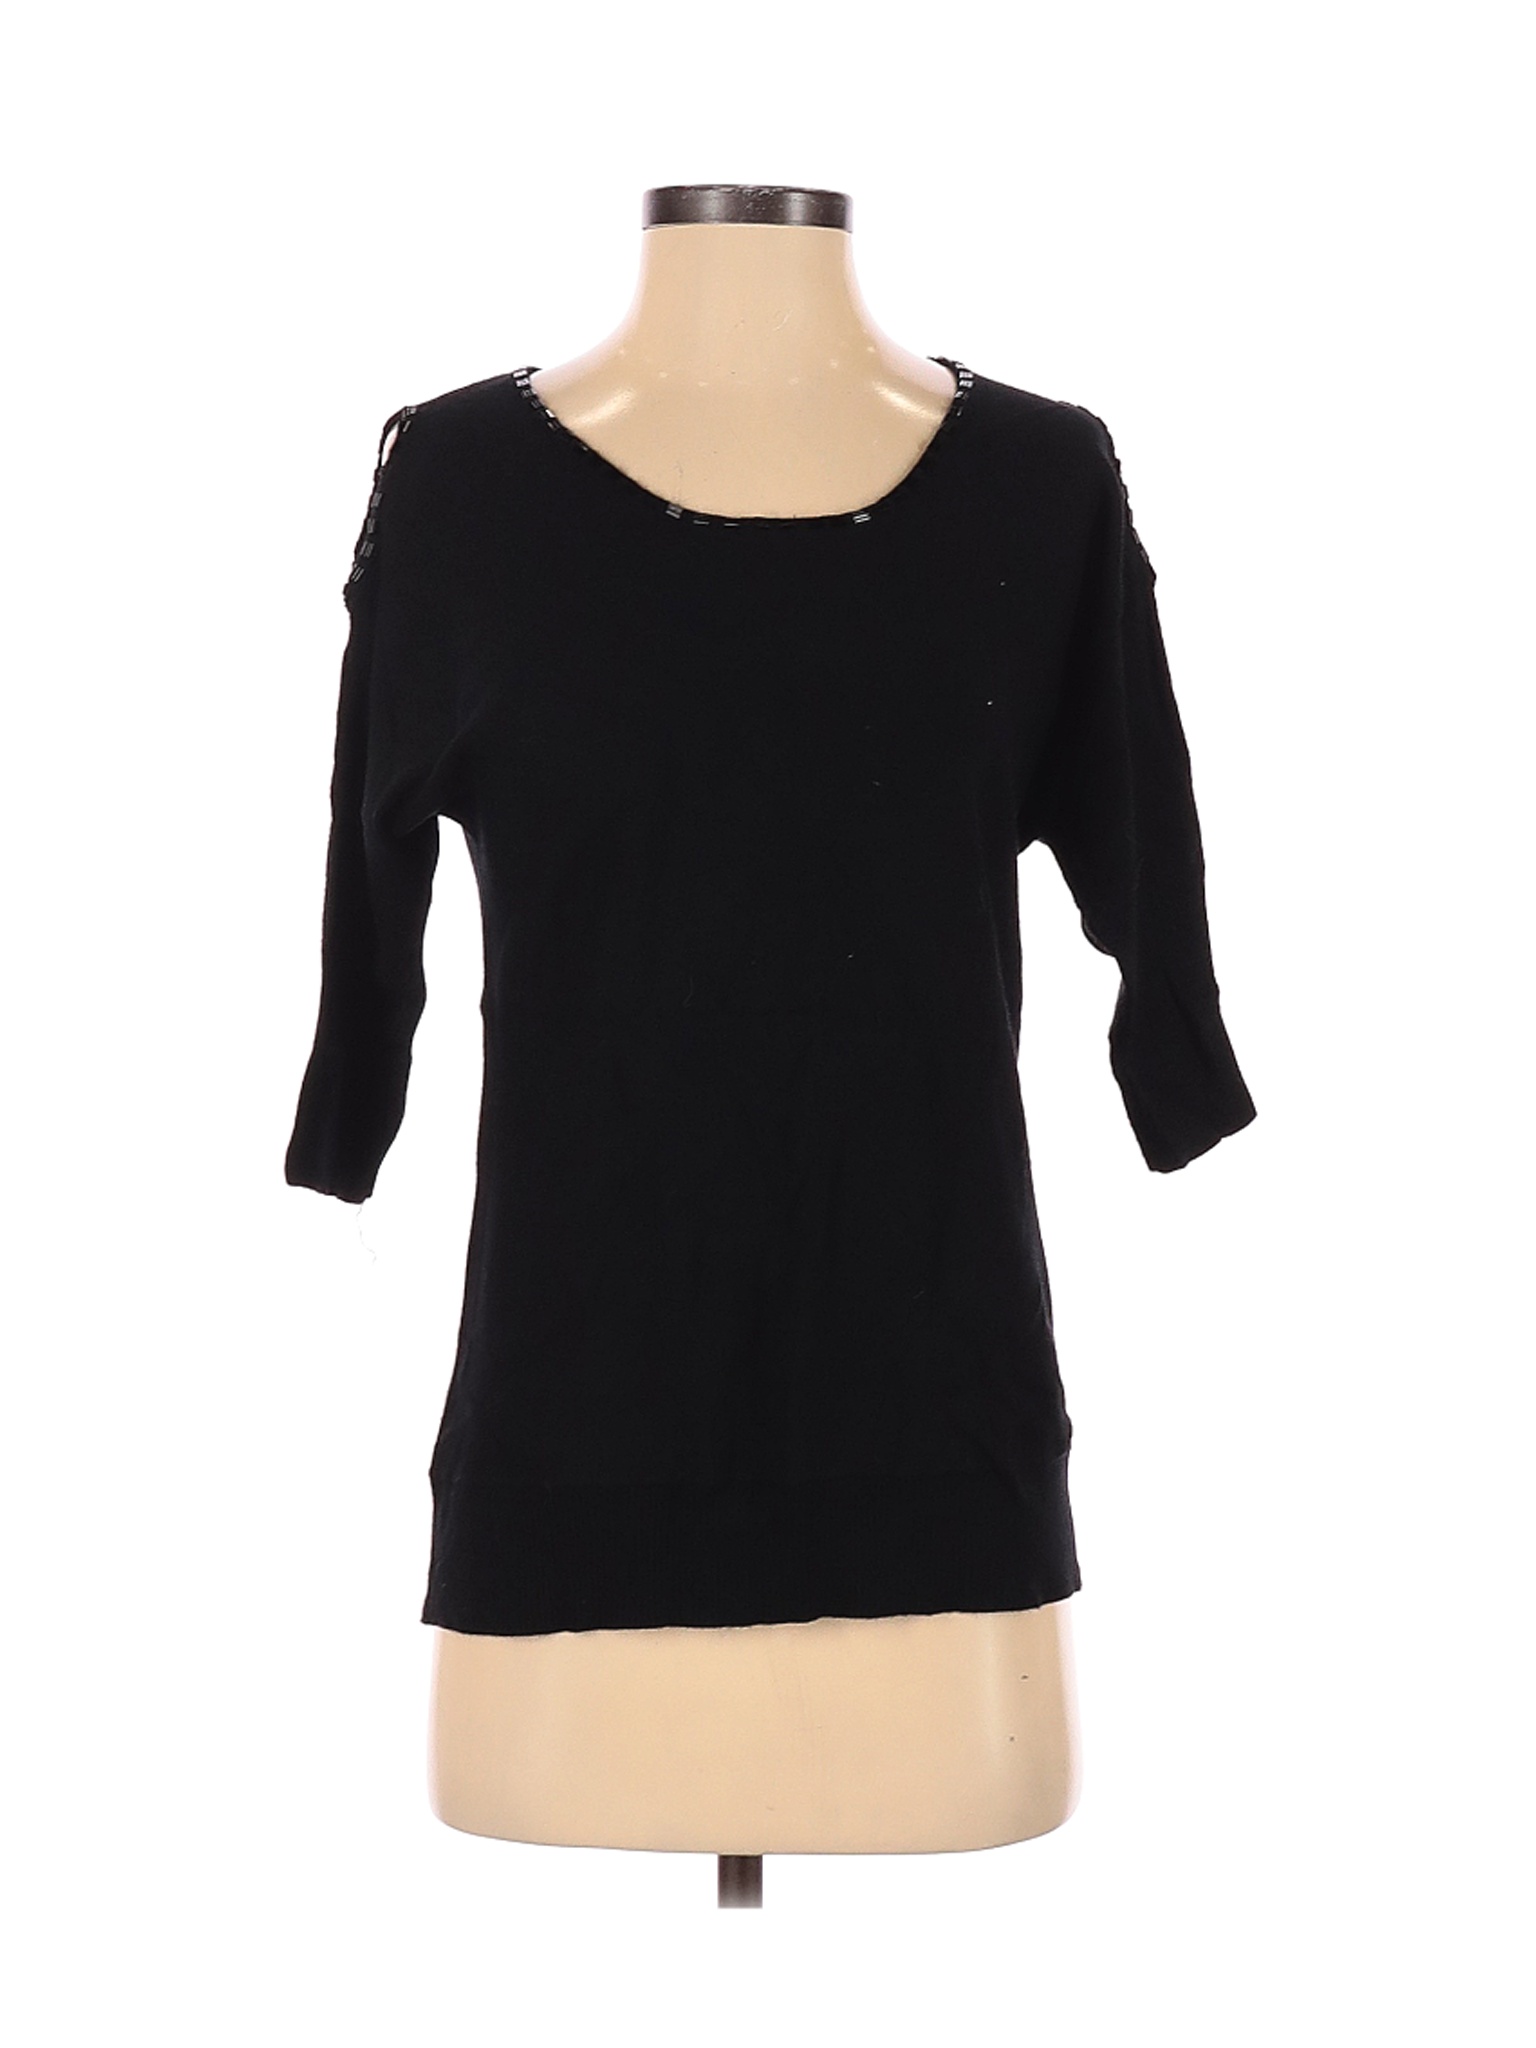 Peck & Peck Women Black Long Sleeve Top S Petites | eBay